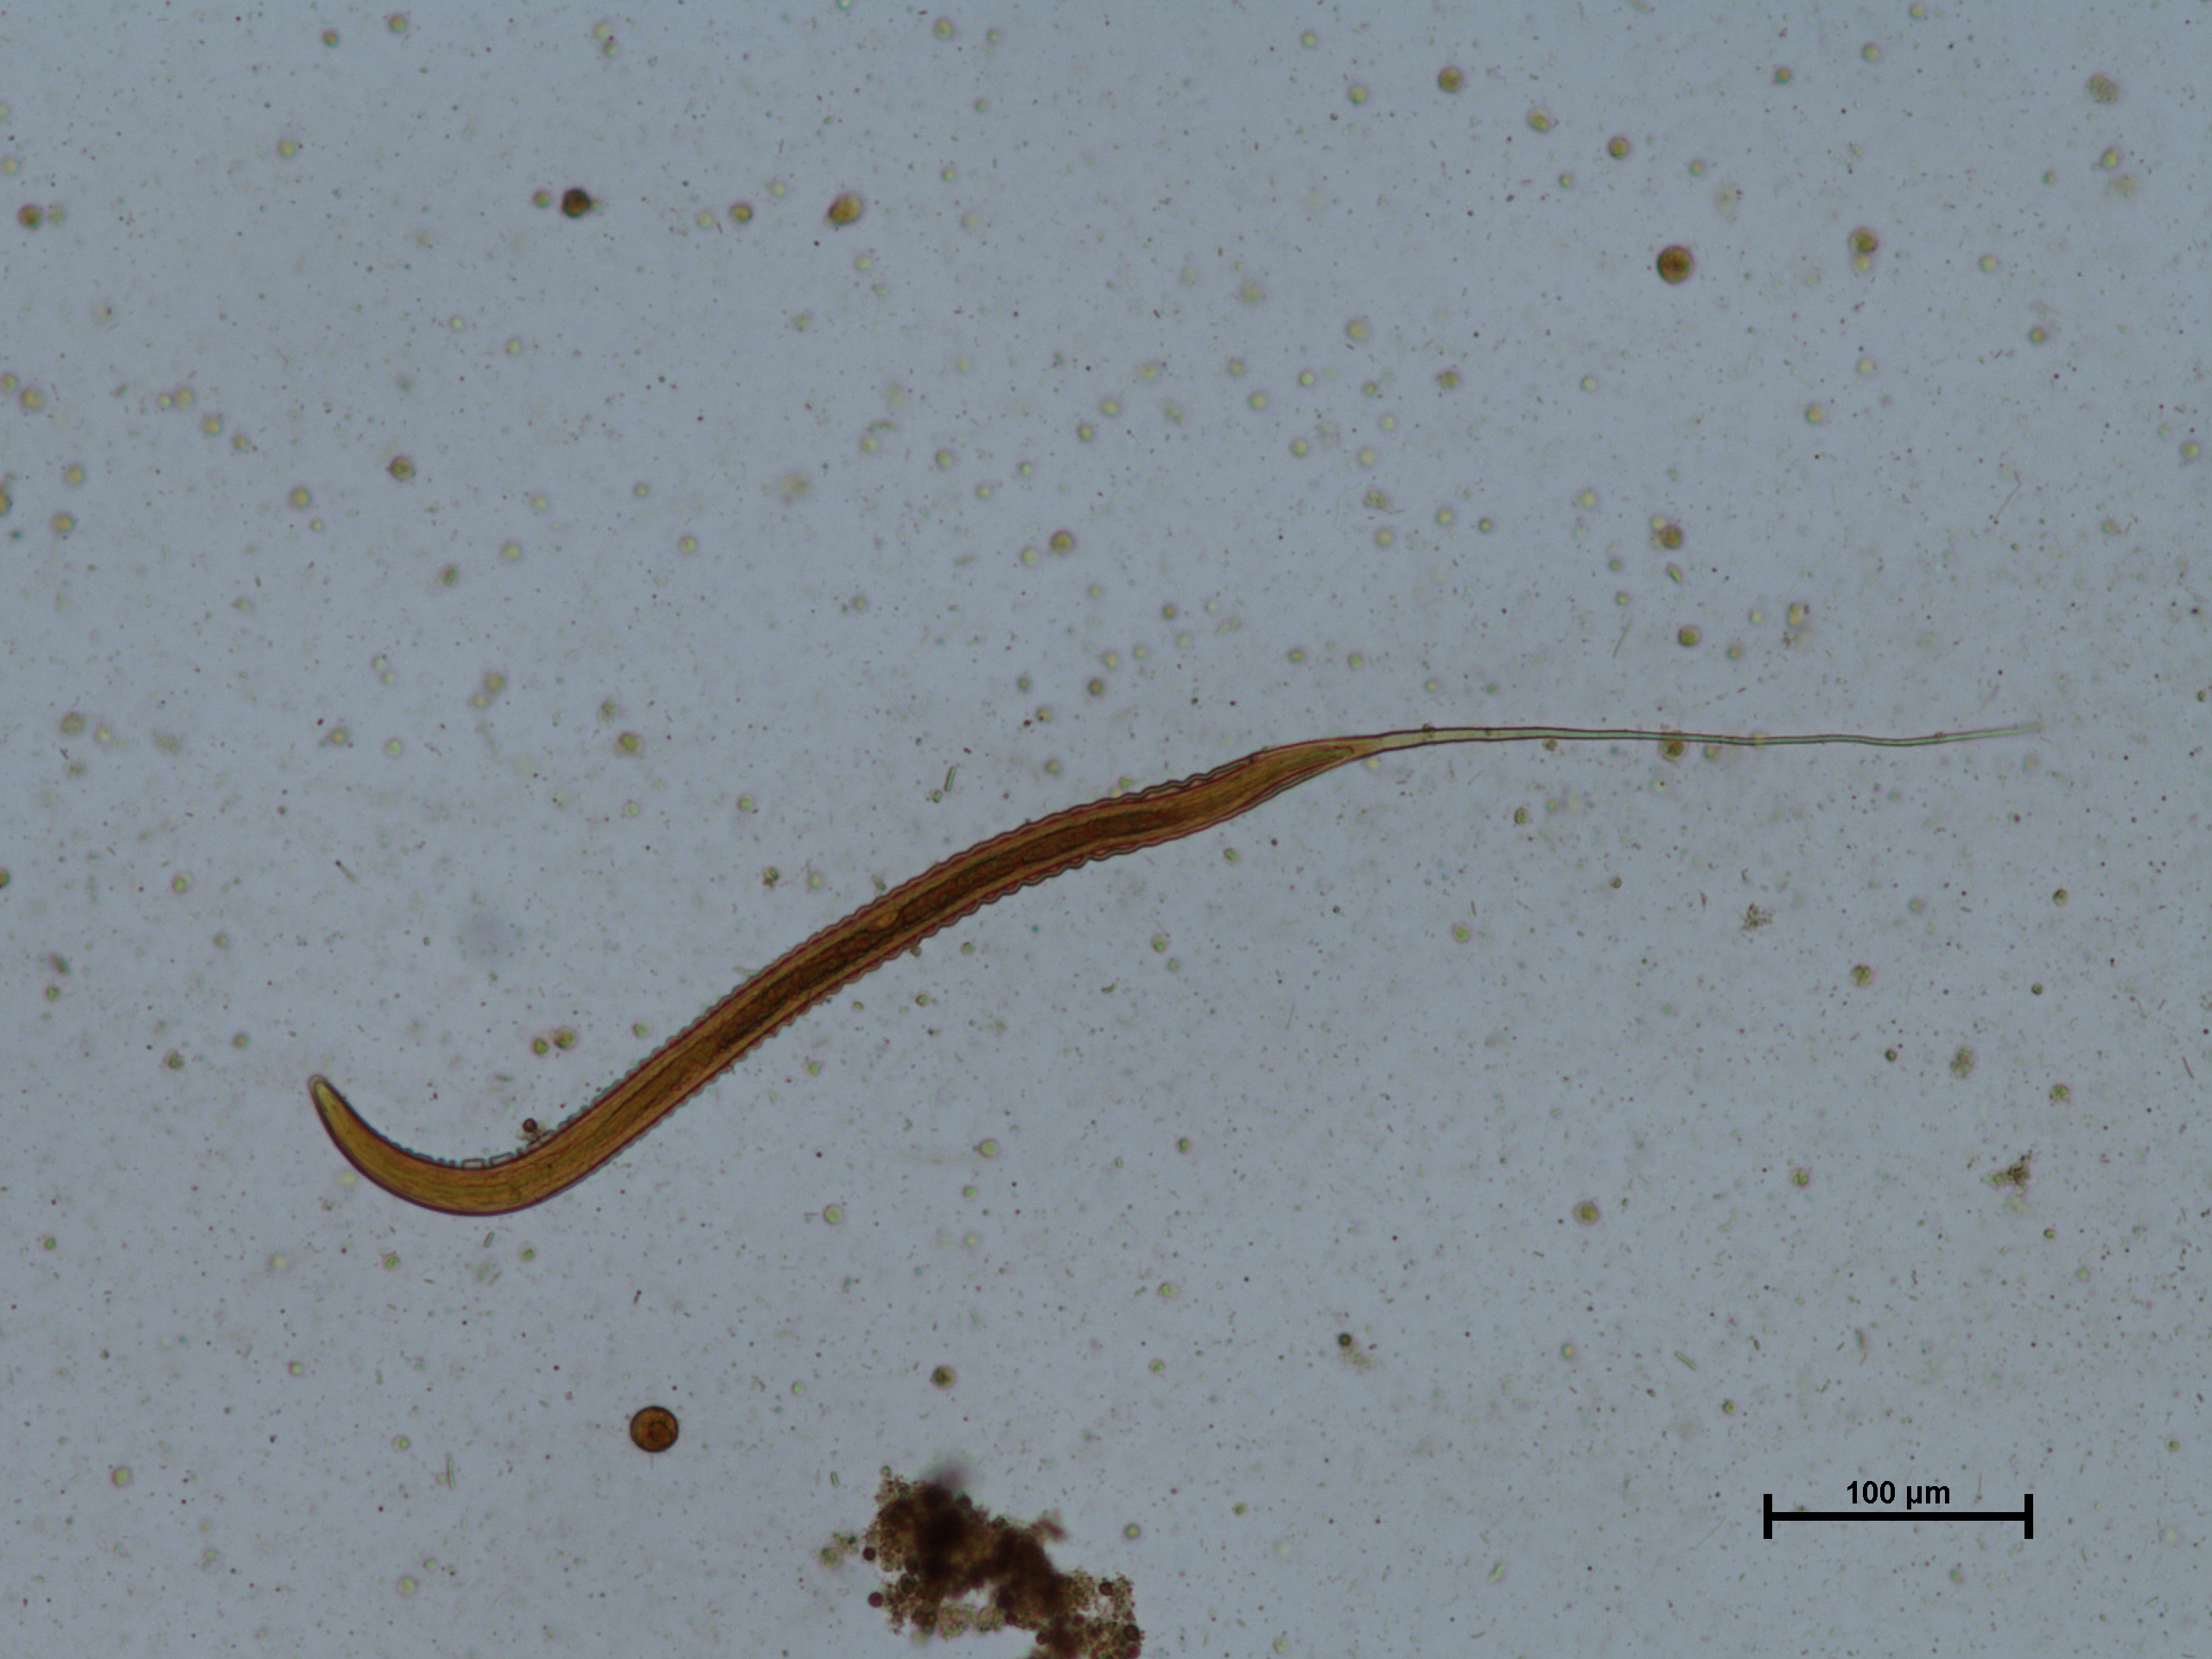 Larva tercer estadio de ciatostomino